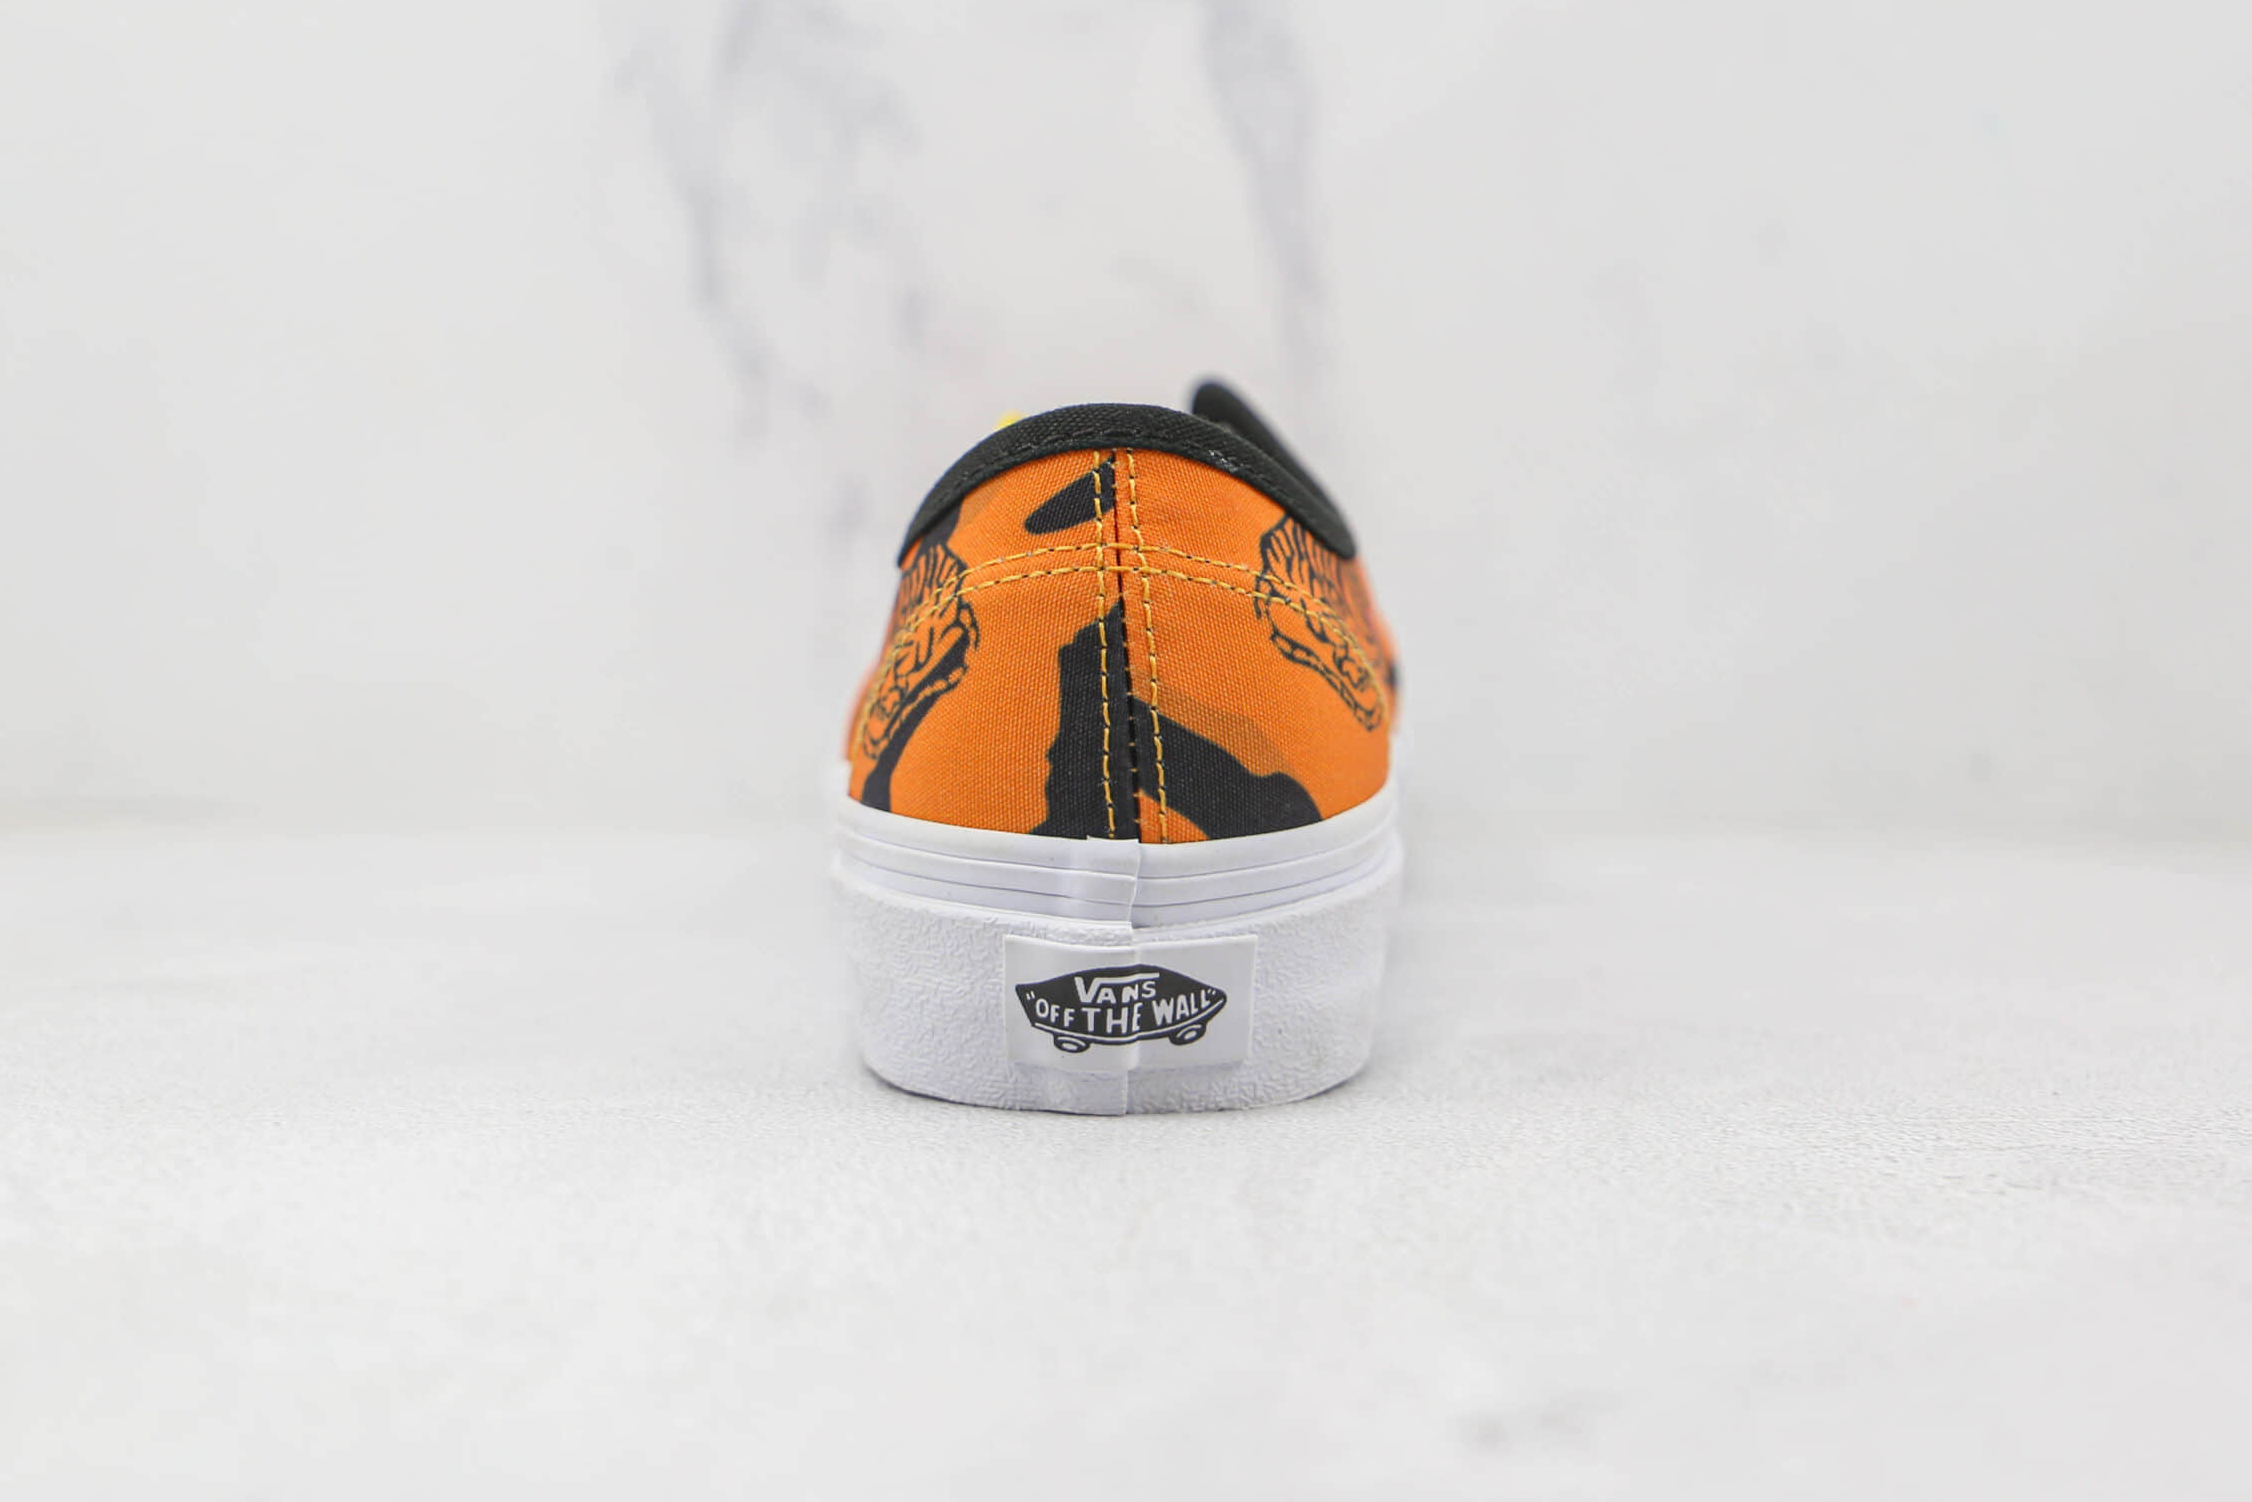 Vans Unisex Authentic Low-Top Sneakers Black Orange - Stylish and Versatile Footwear